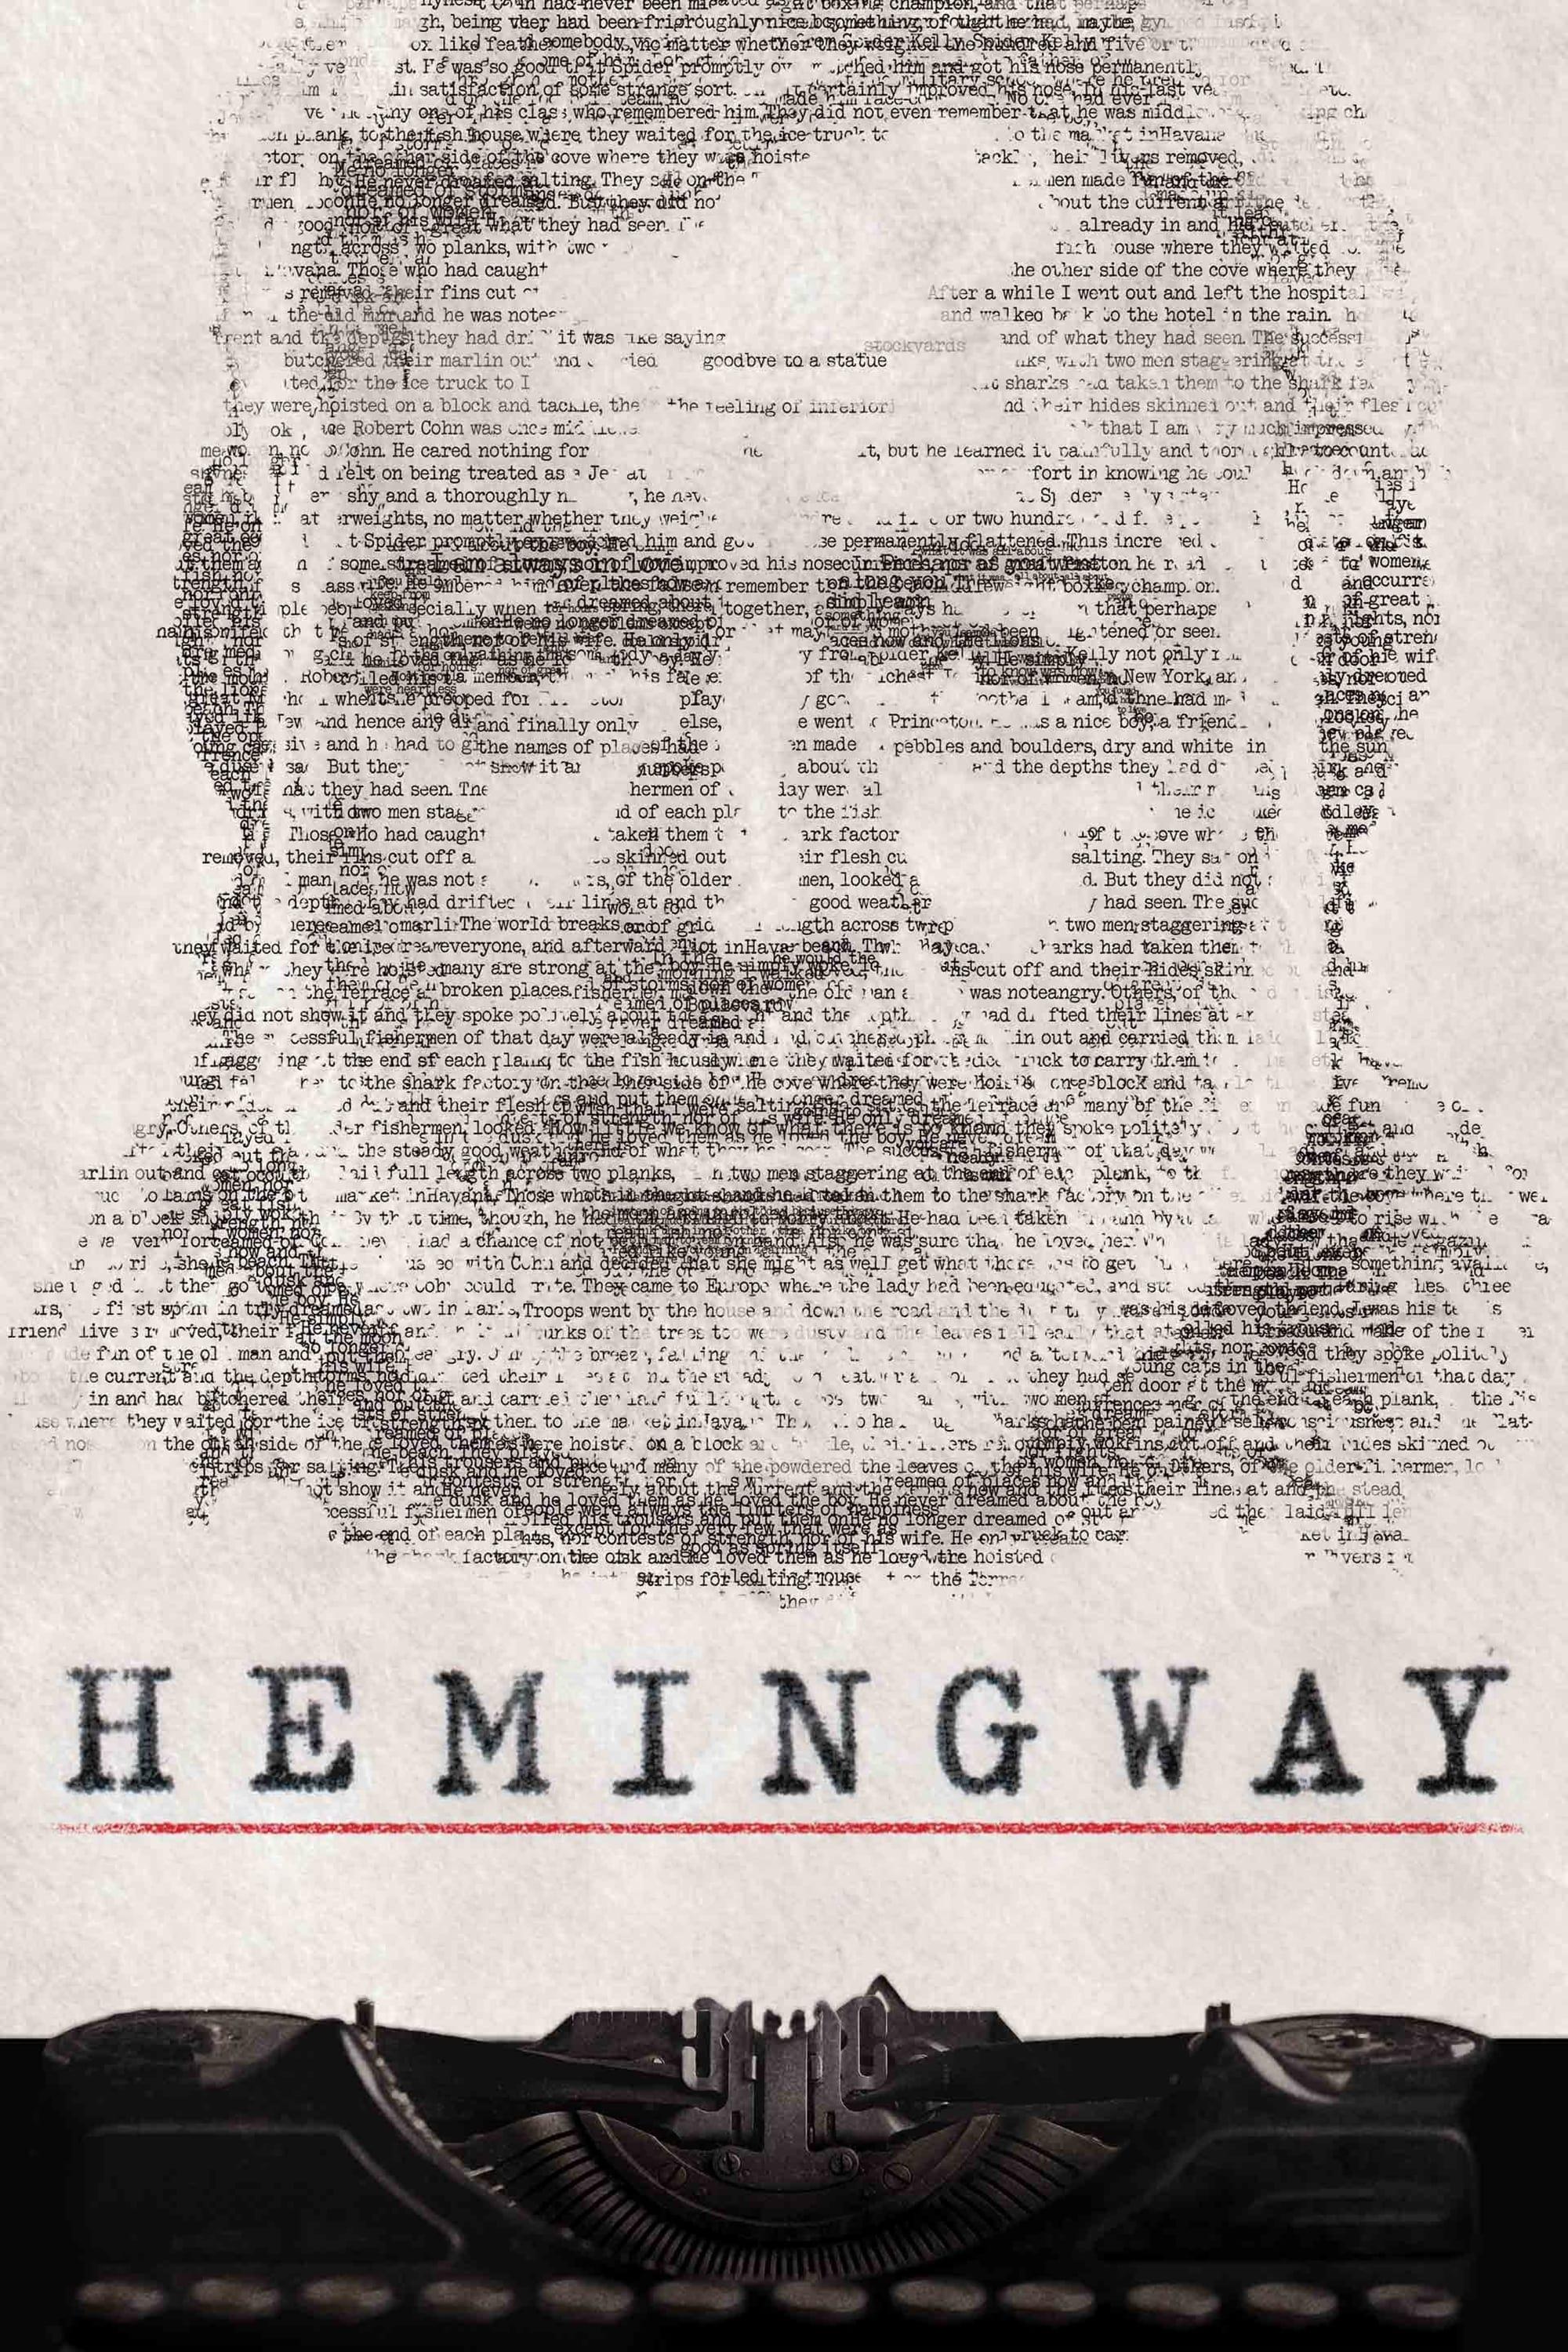 Hemingway poster